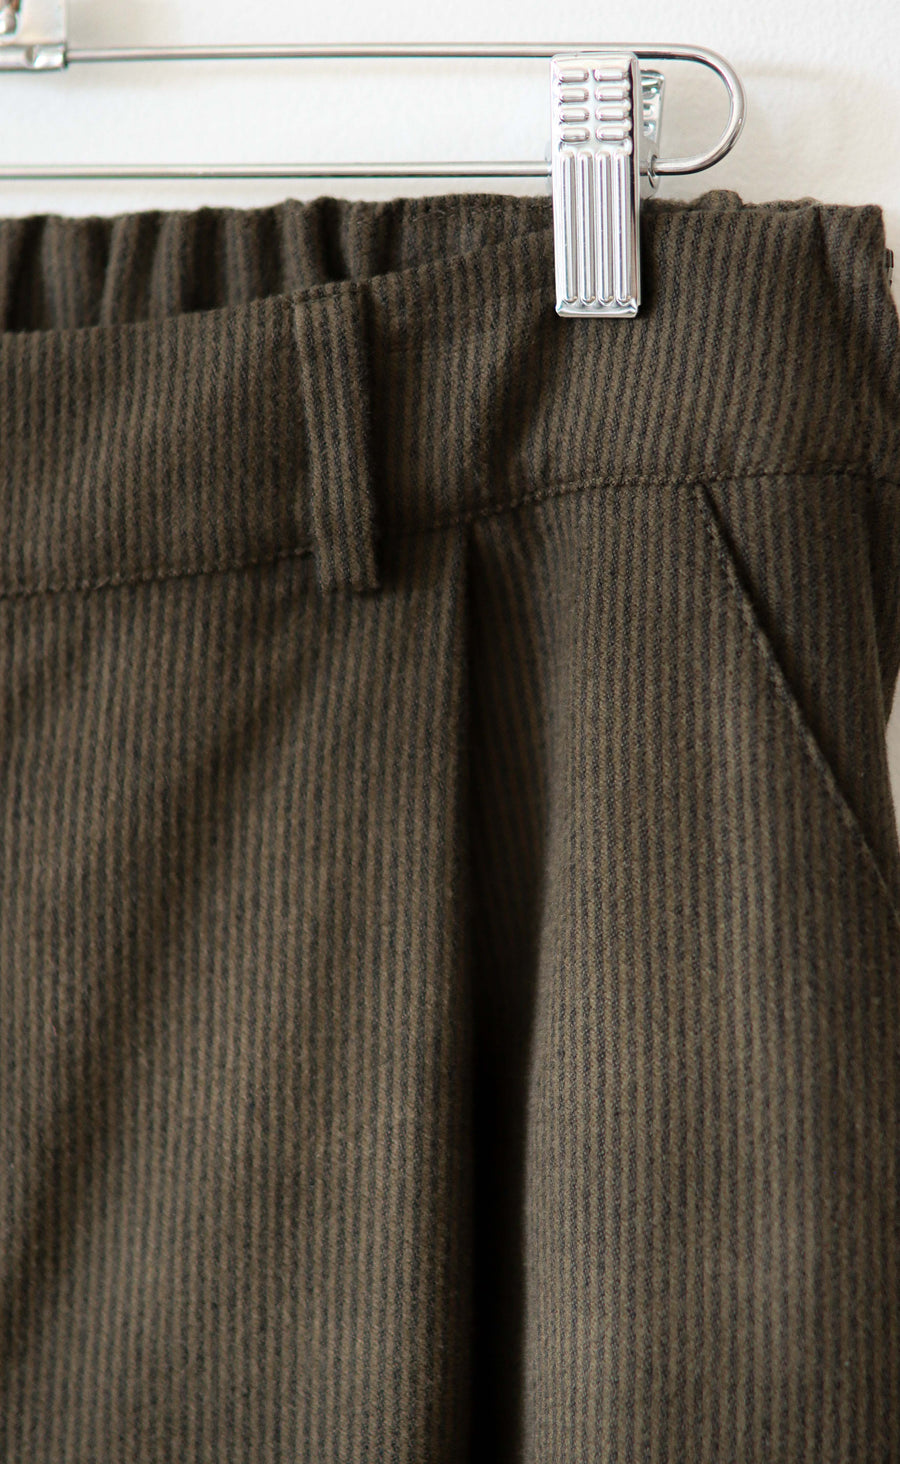 The Minimalist - Olive Wayward Fit Pants